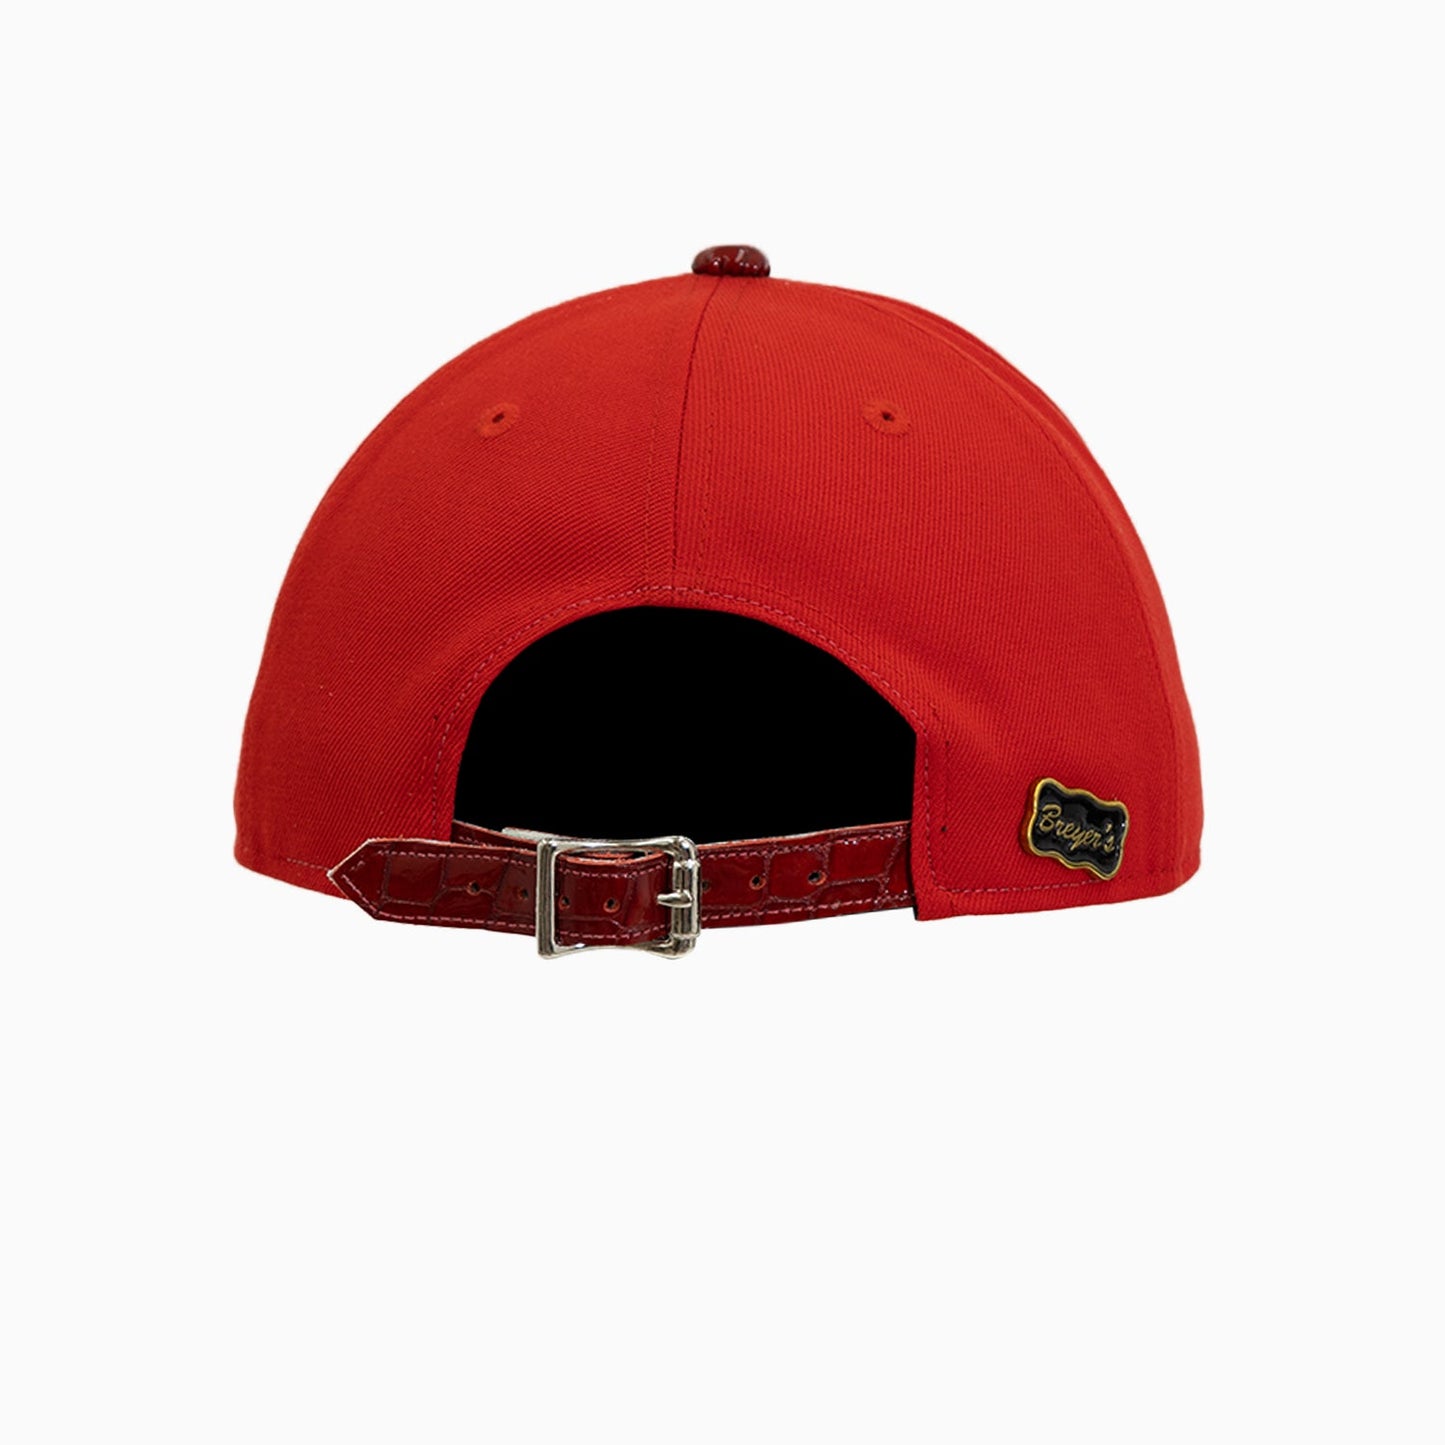 Breyer's Buck 50 Kansas City Chiefs Hat With Leather Visor